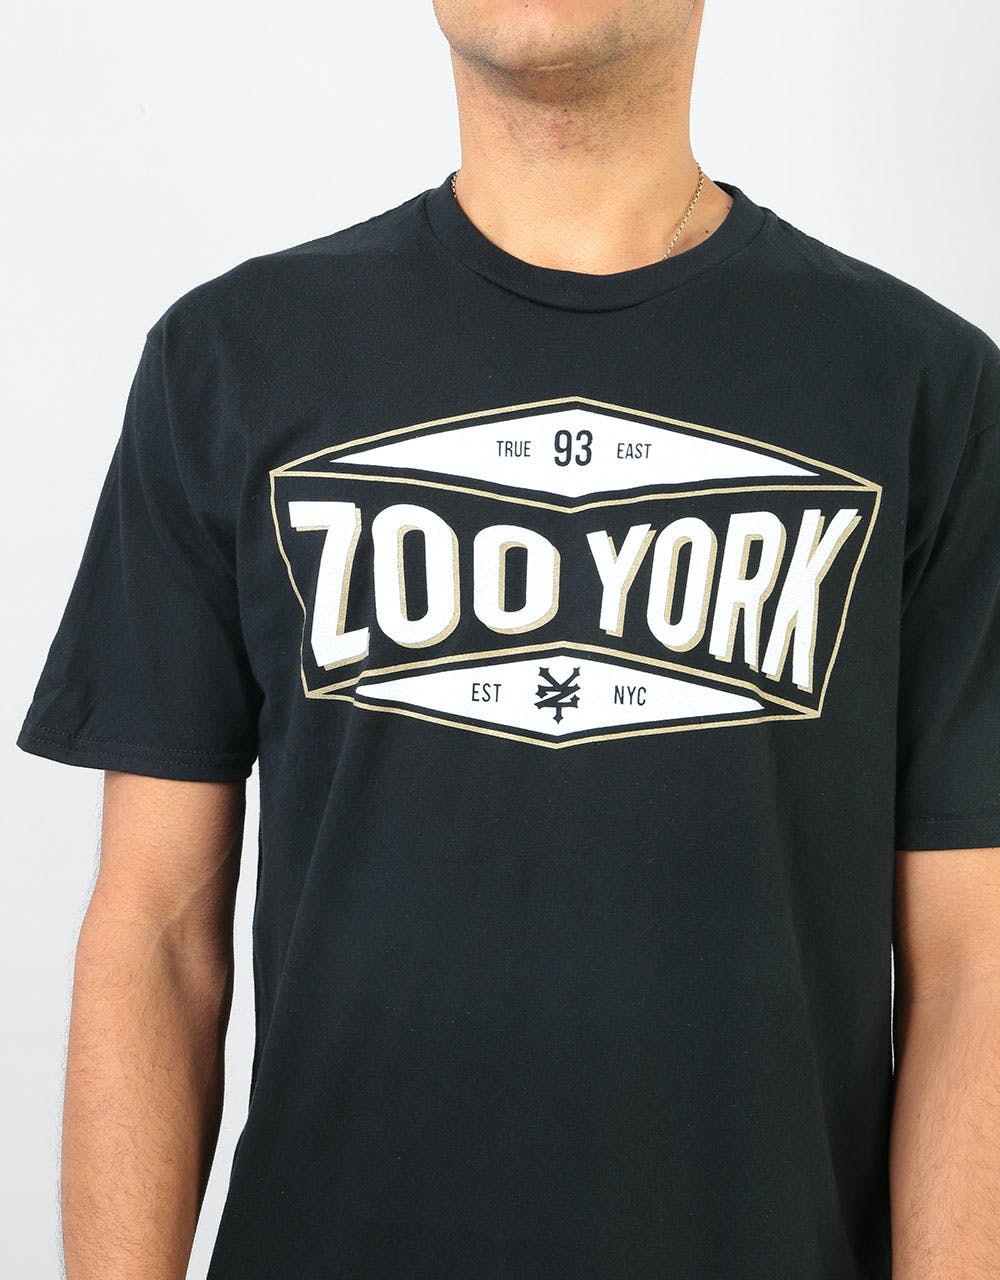 Zoo York Concave T-Shirt - Black